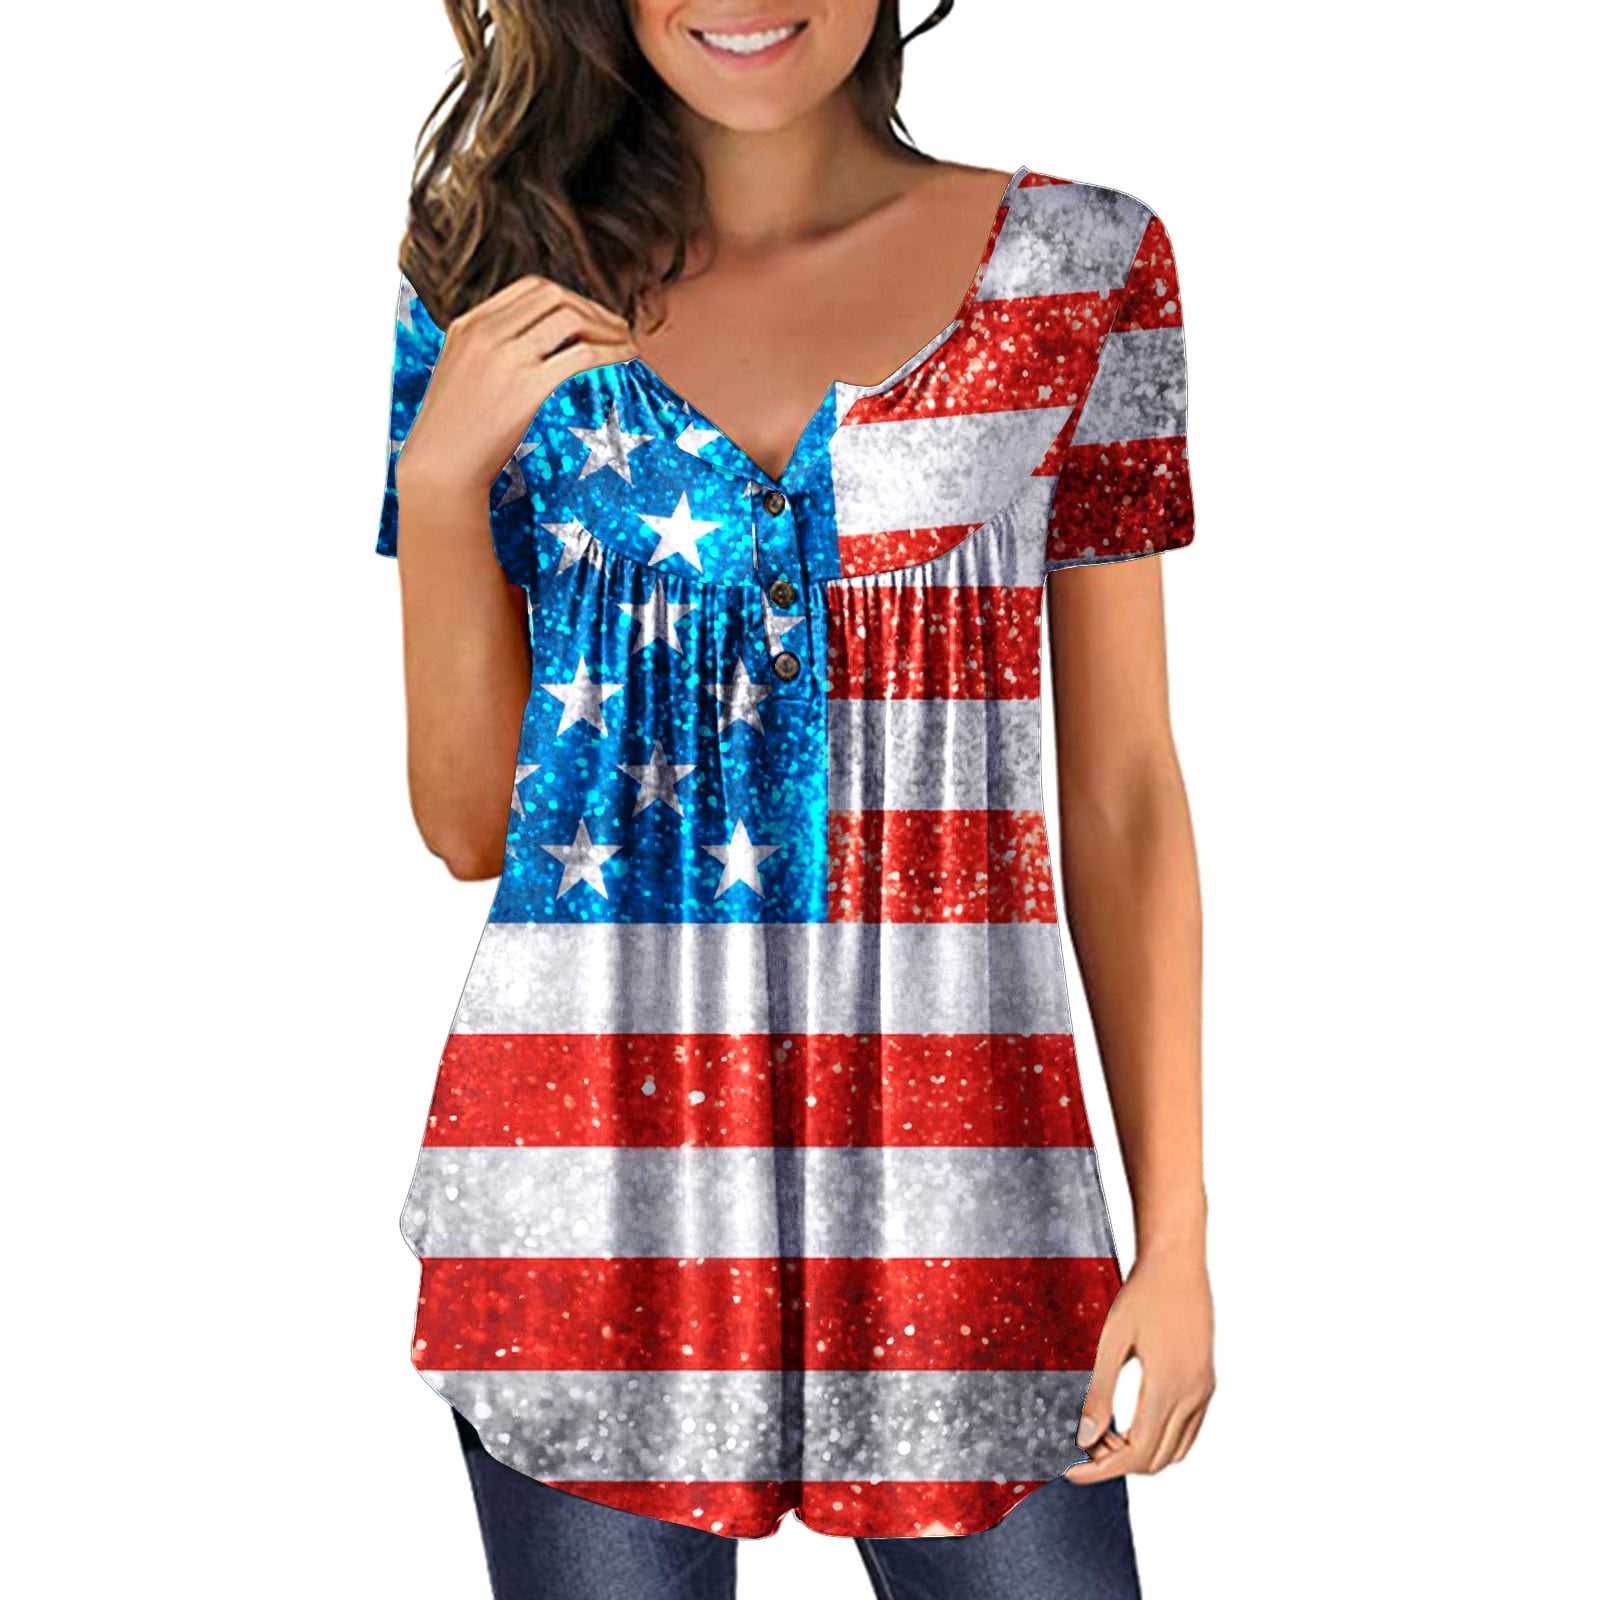 TQWQT Womens Tops American Flag Print Shirts 4th Of July Tunic Tops ...